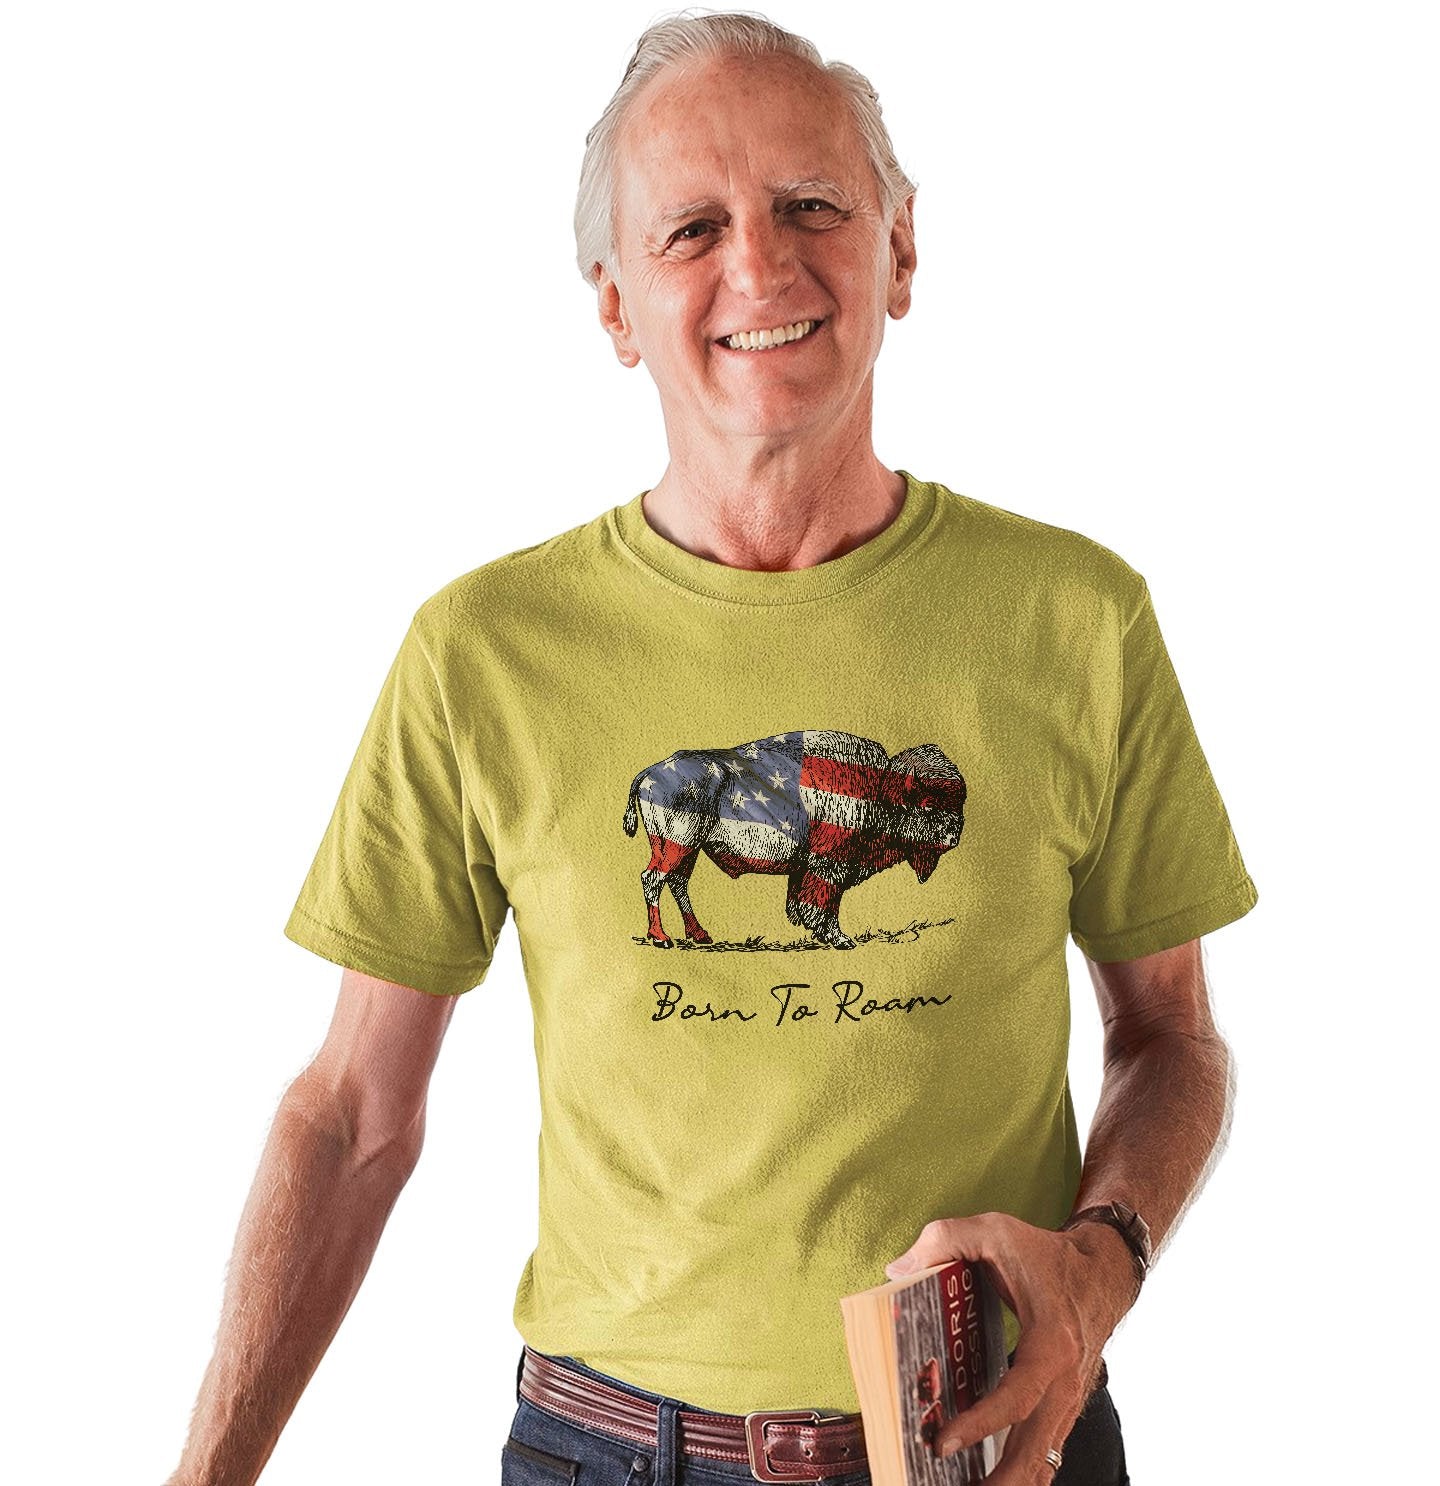 Buffalo Flag Overlay - Adult Unisex T-Shirt